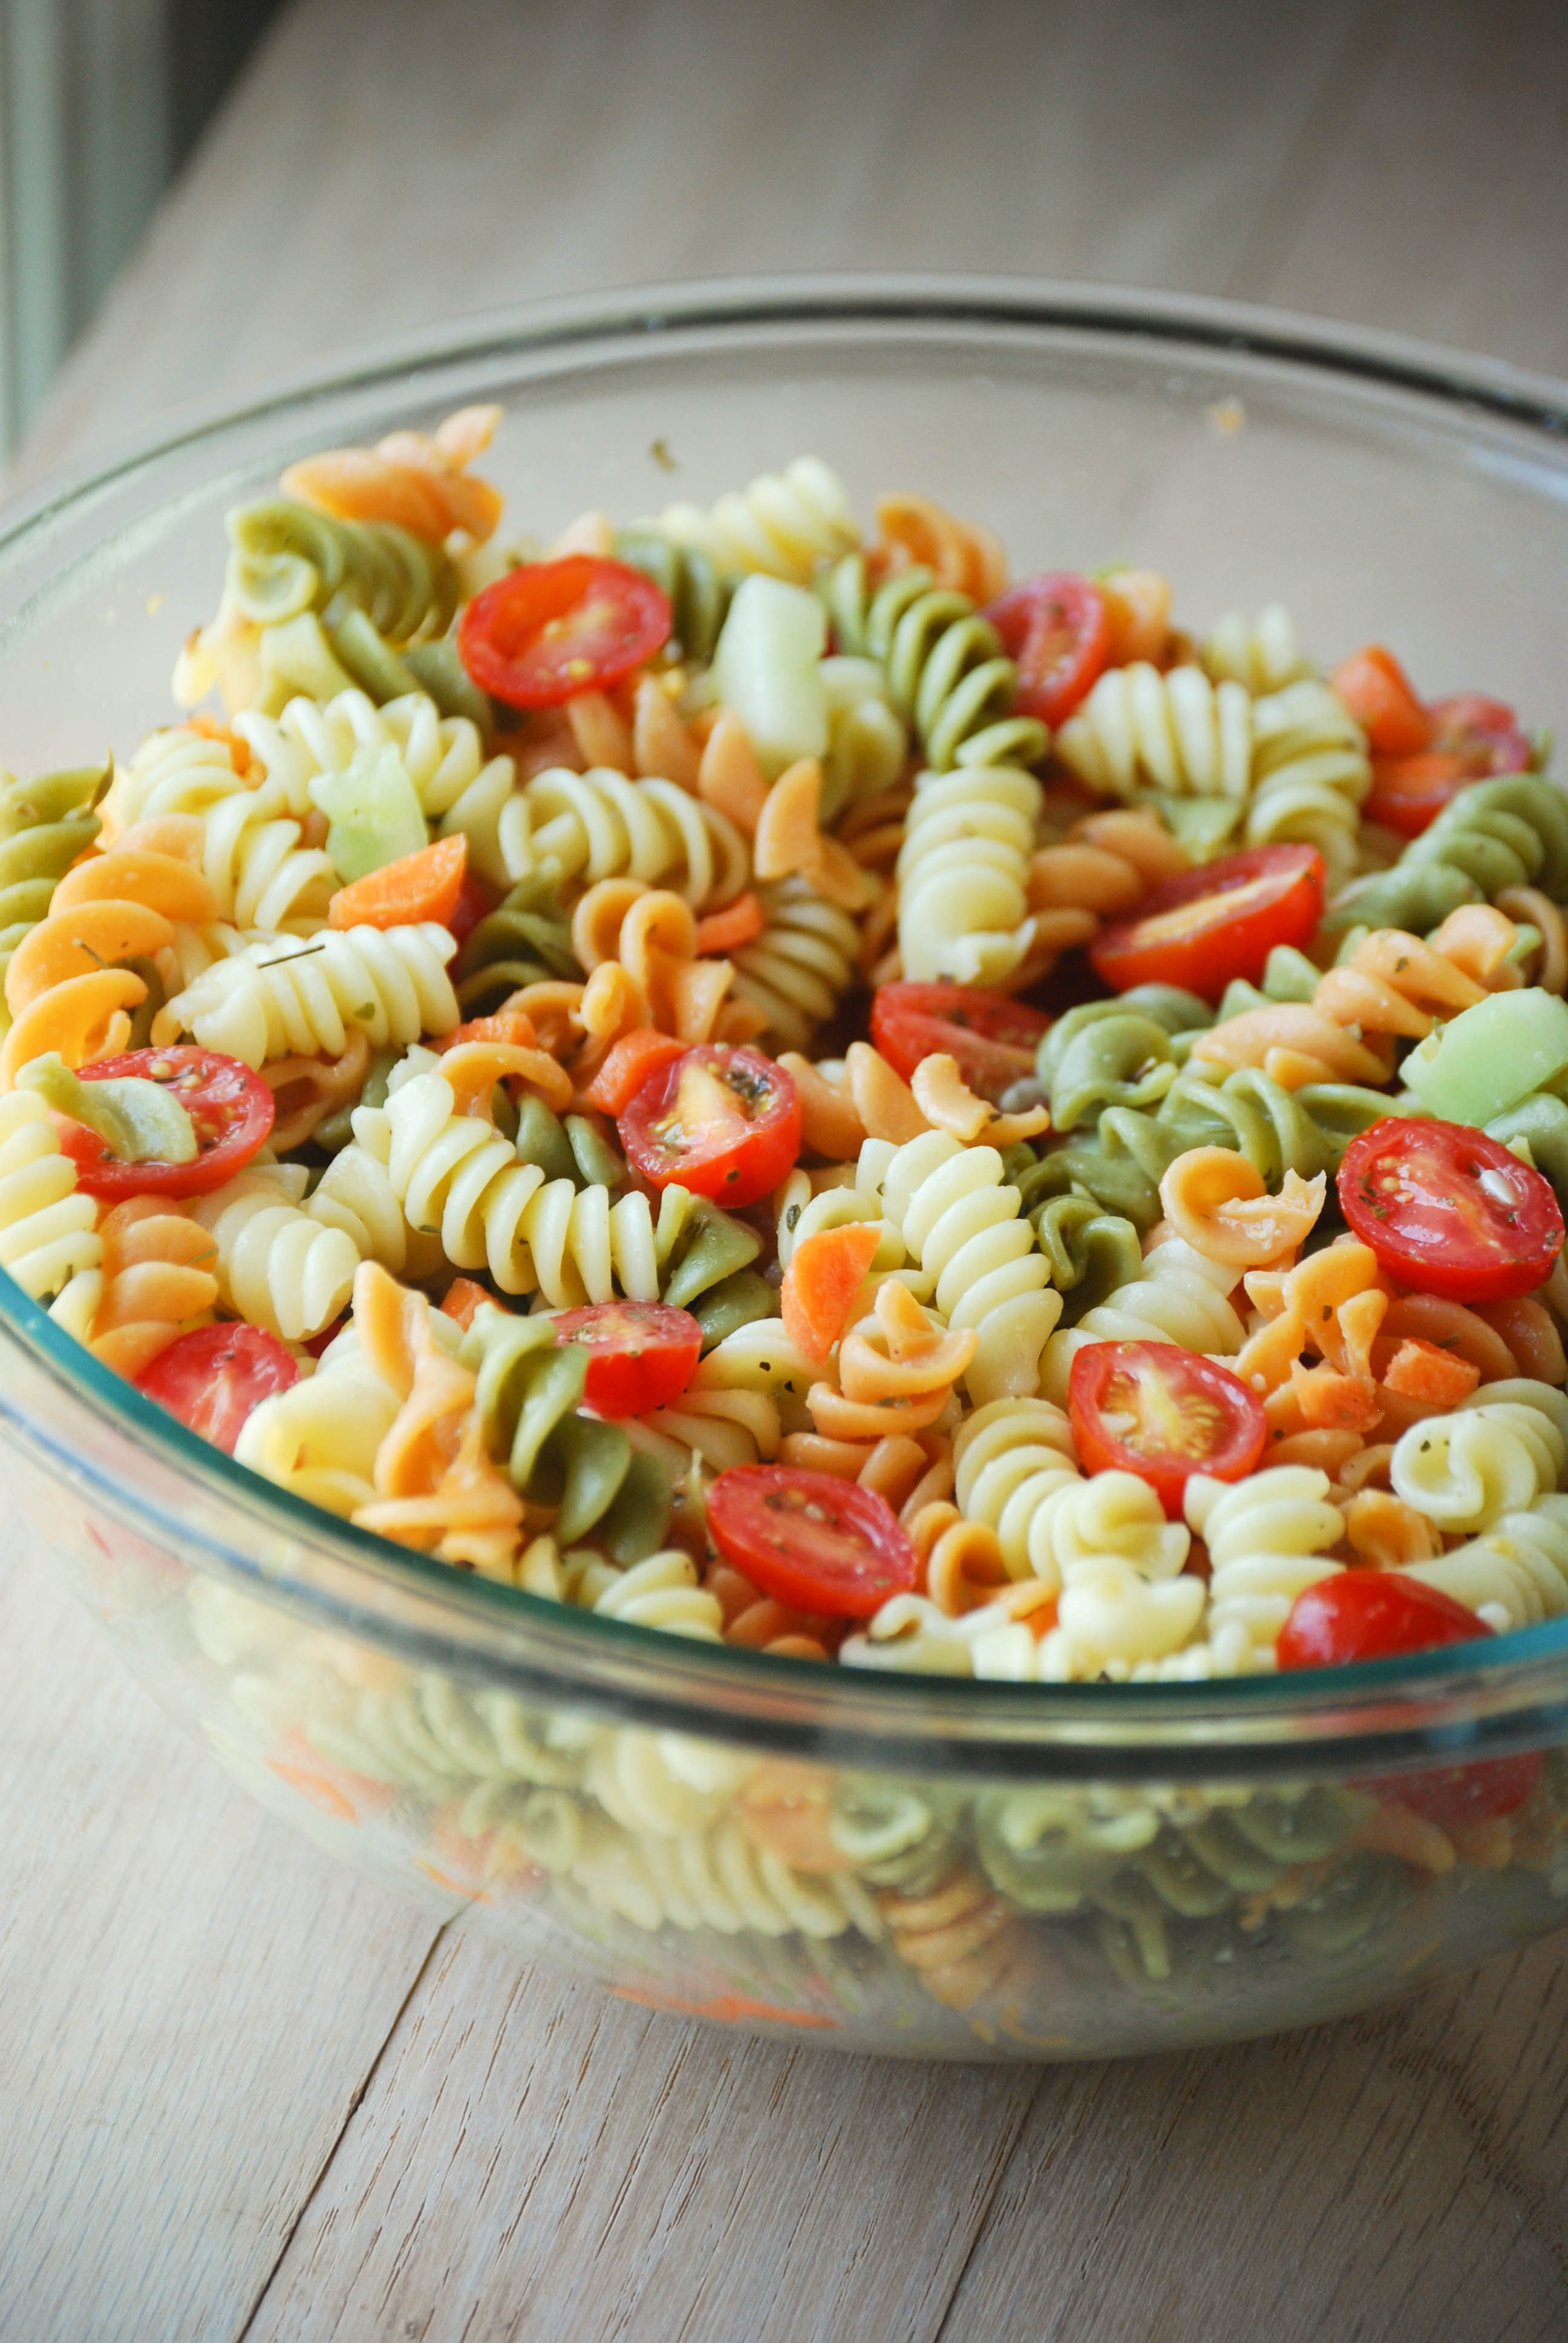 Jason's Deli Pasta Salad Recipe - Find Vegetarian Recipes